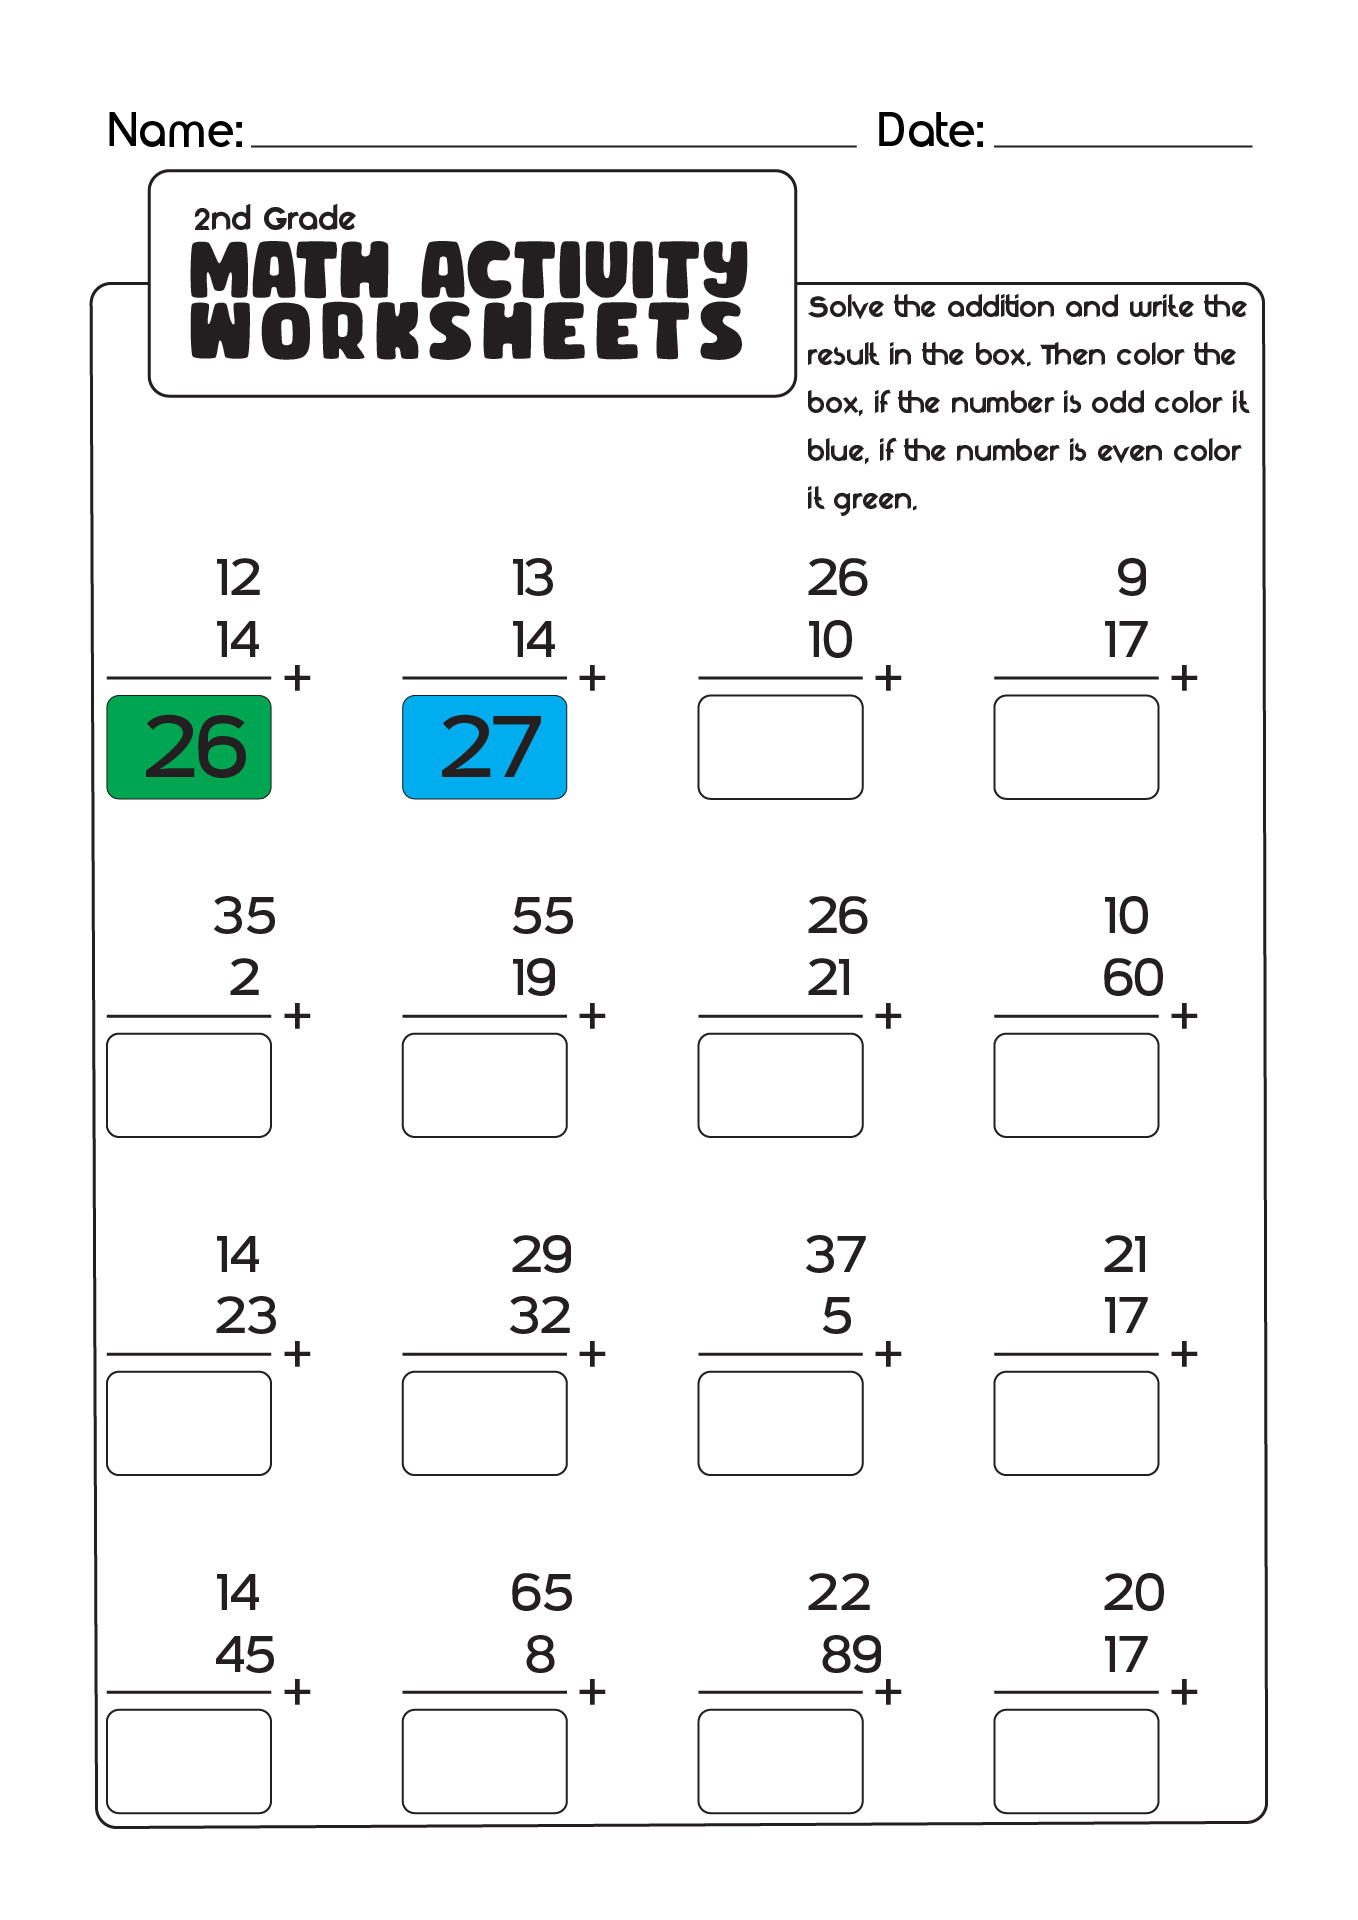 2nd Grade Math Activity Worksheets